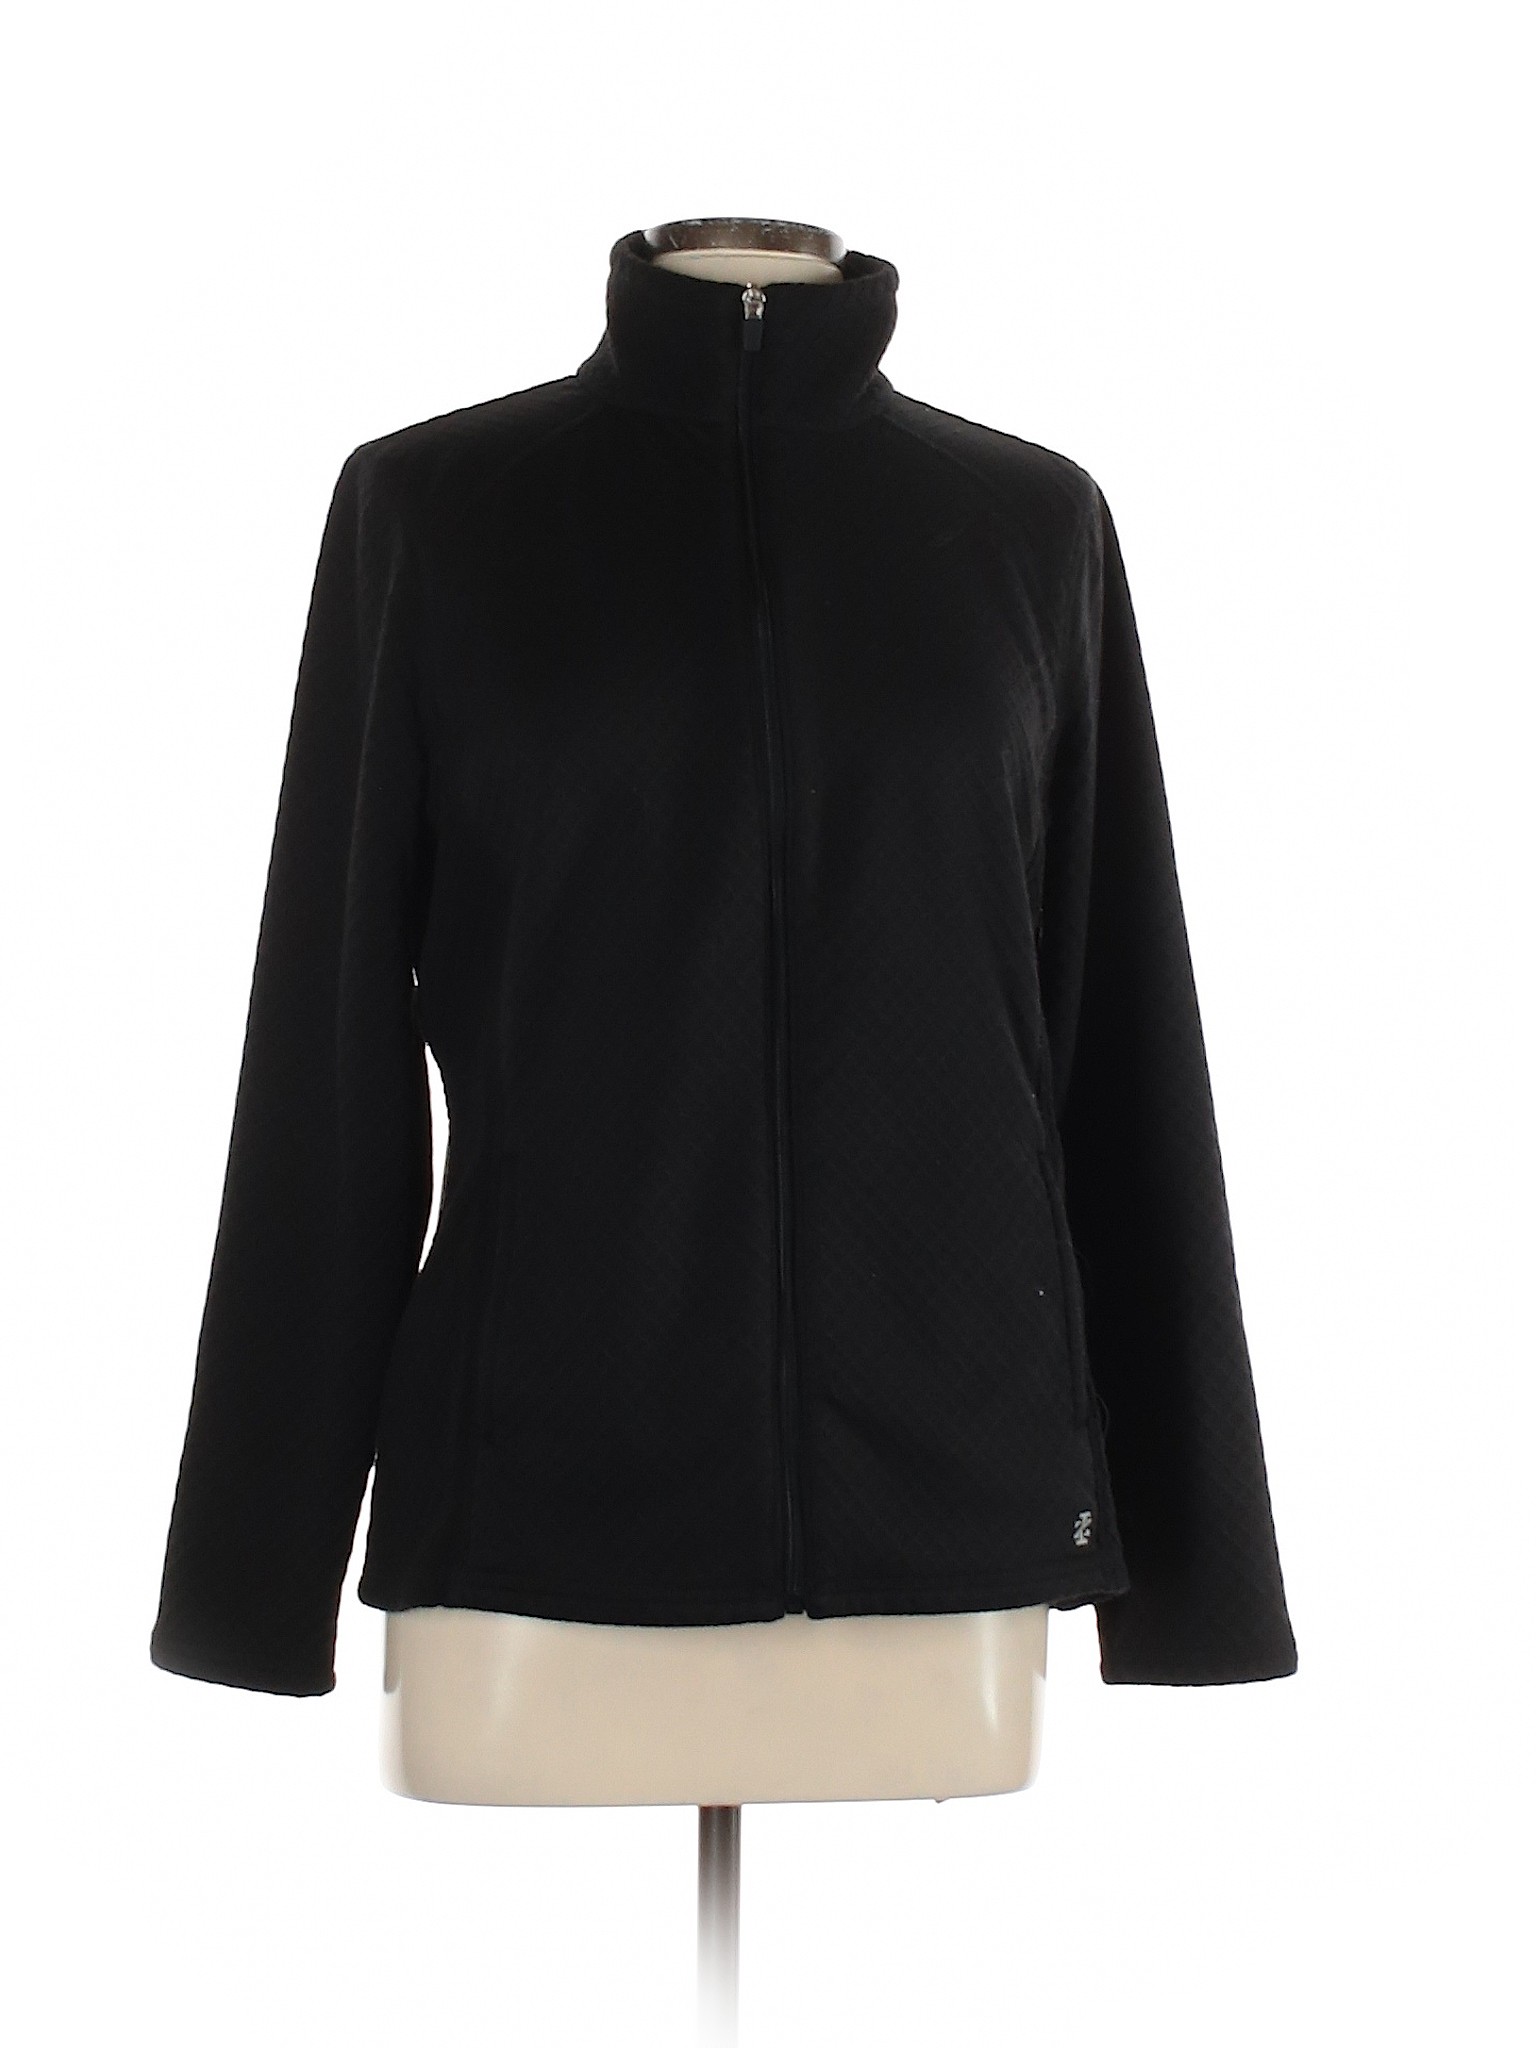 IZOD Women Black Jacket L | eBay